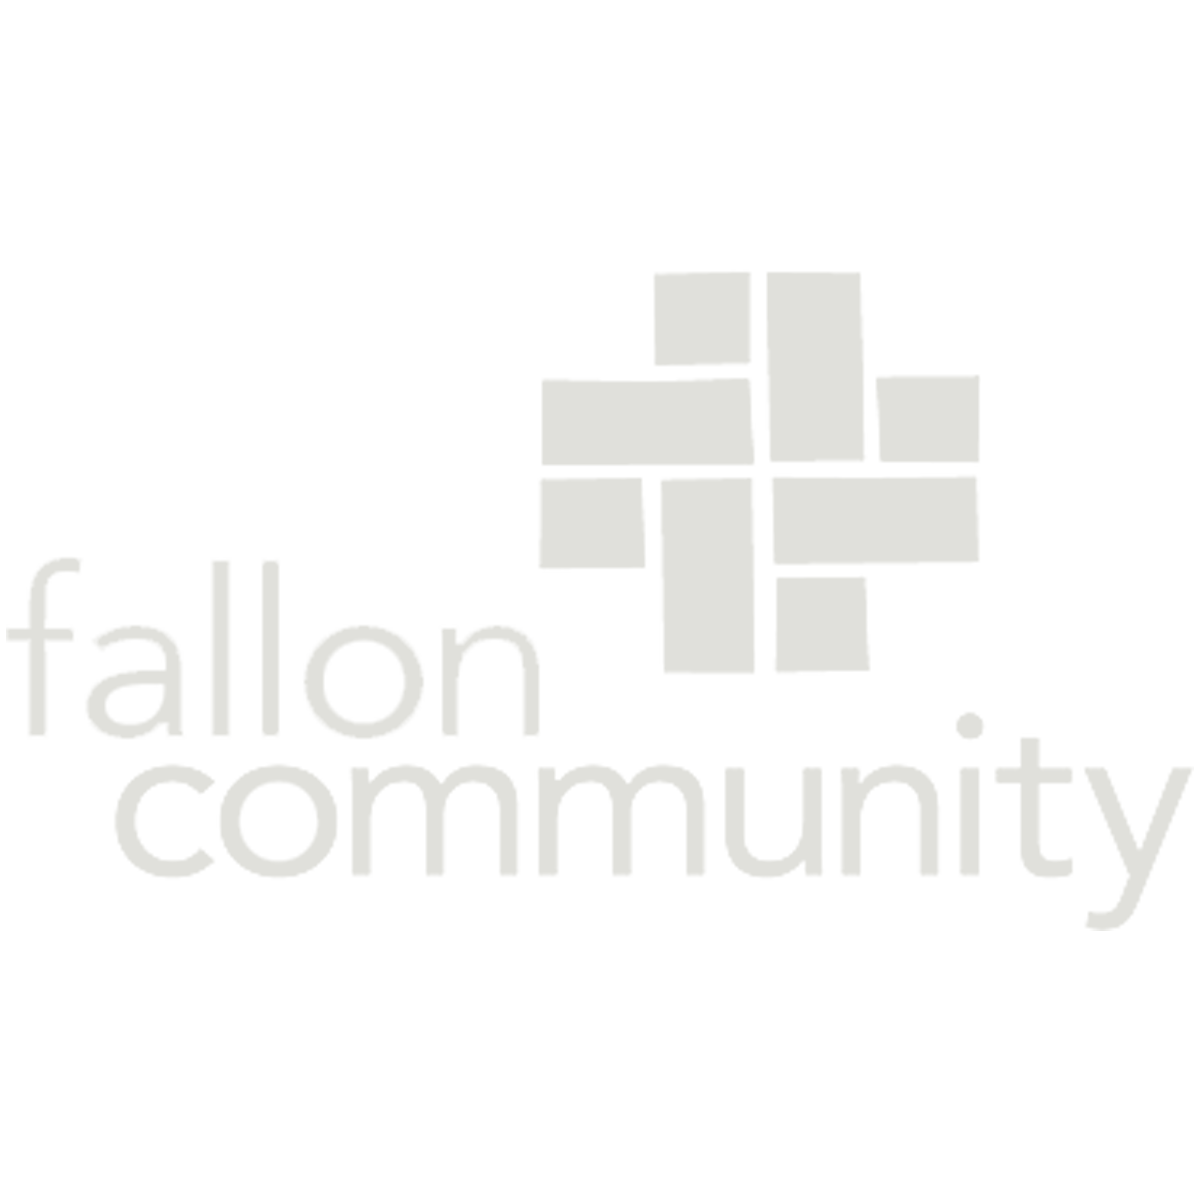 fallon community.png